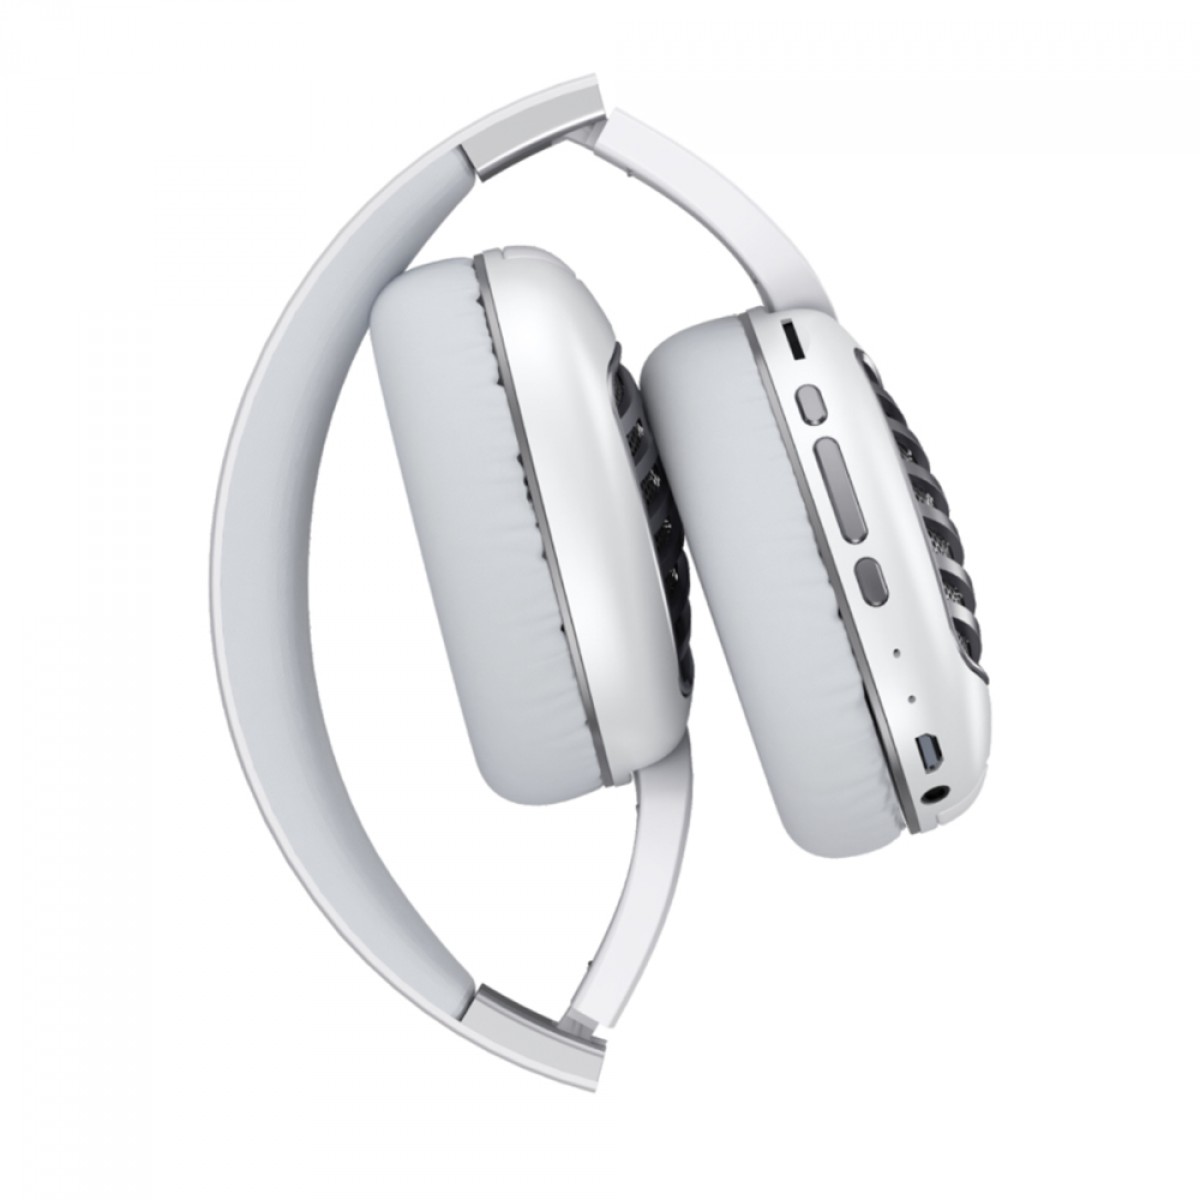 Headphone Hoopson, Sem Fio, Bluetooth, Drivers de 40mm, Branco, F-403-BC